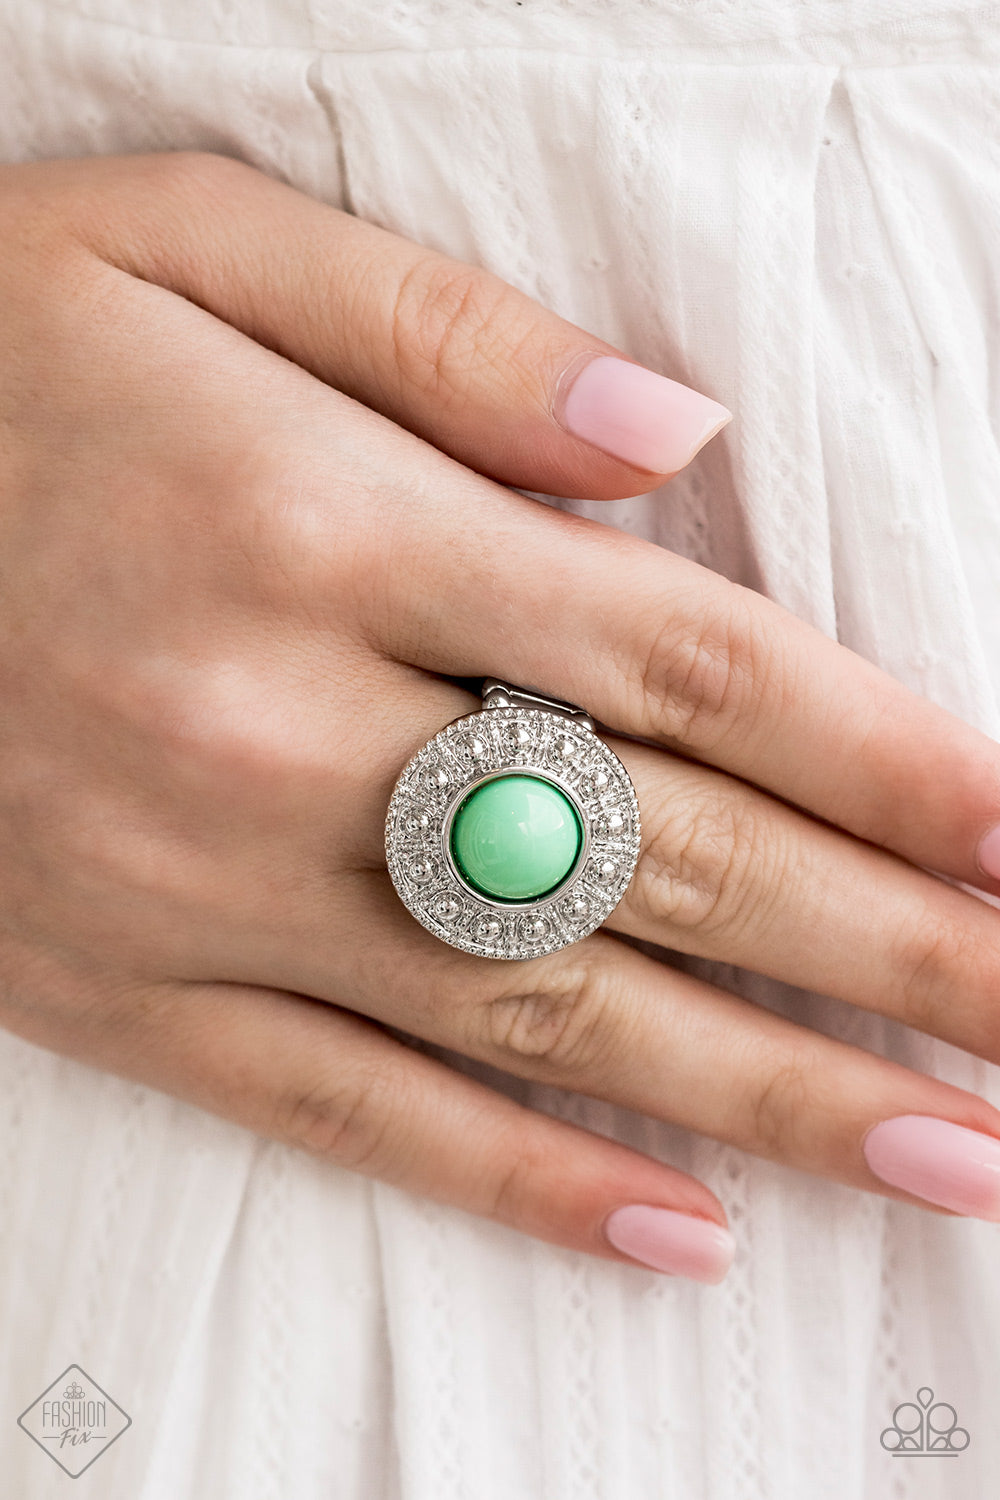 Paparazzi Accessories - Treasure Chest Shimmer  Fashion Fix Green Ring April 2020